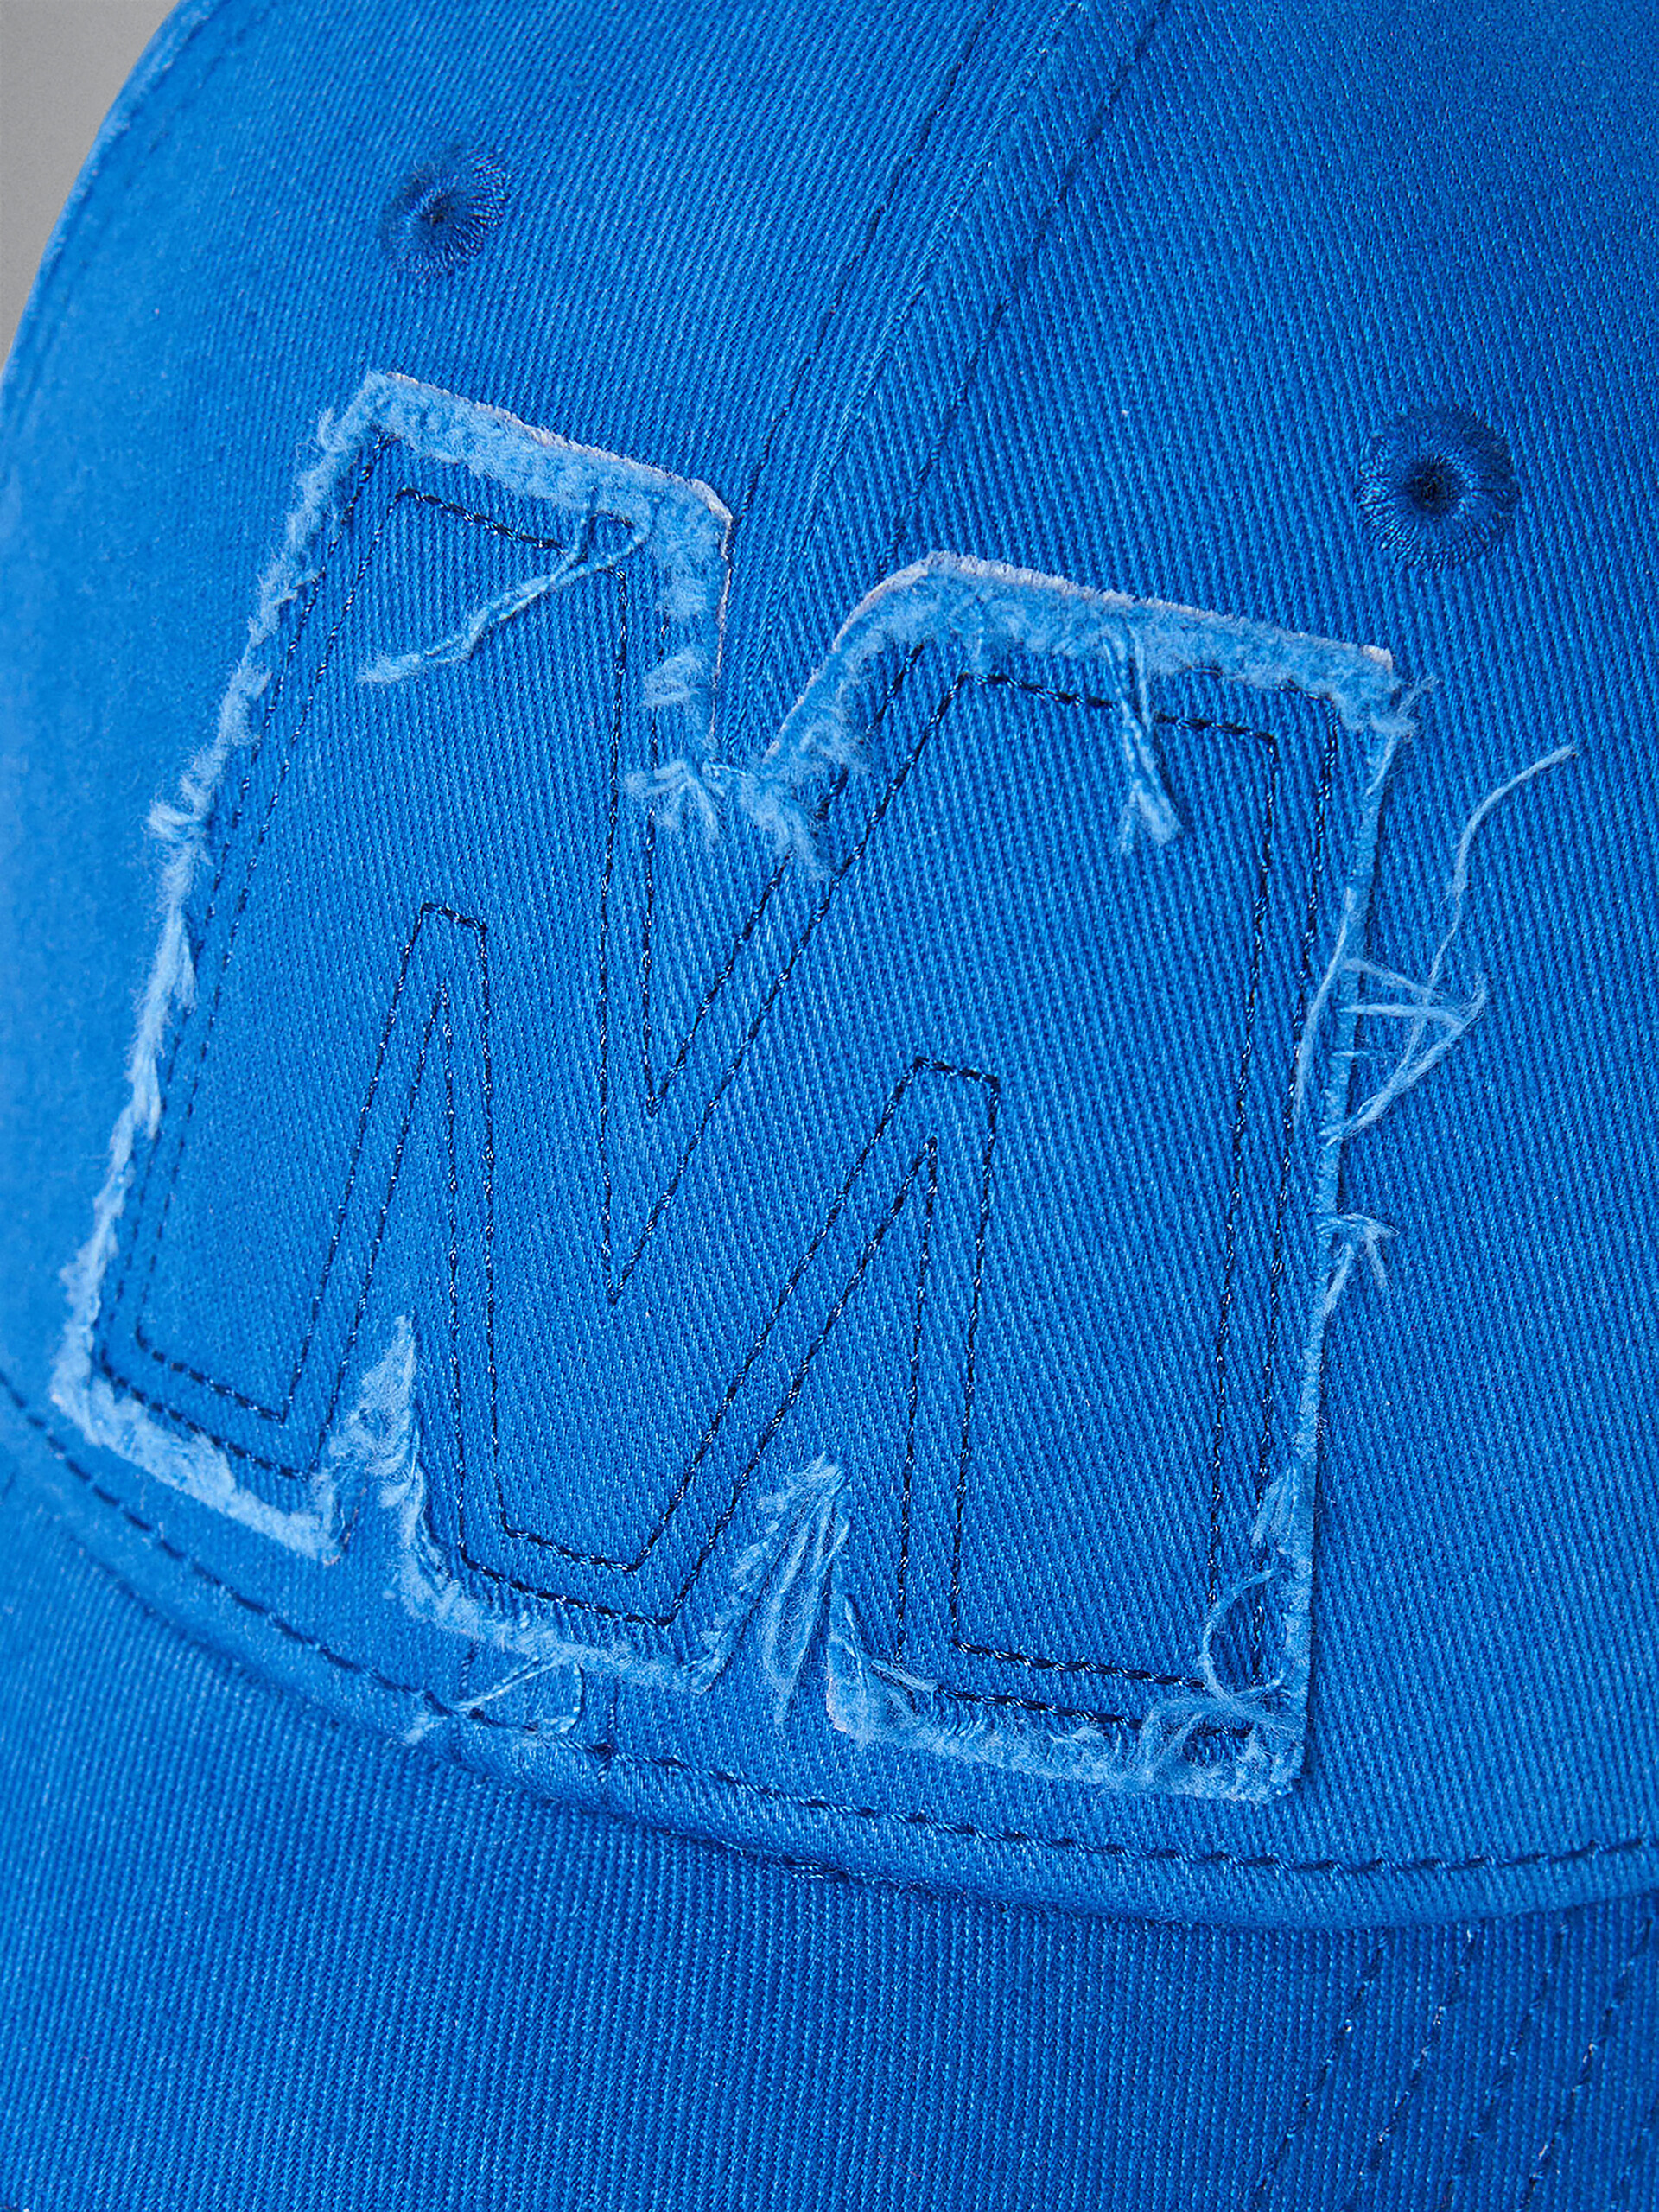 Blue baseball cap with Big M logo - Caps - Image 3